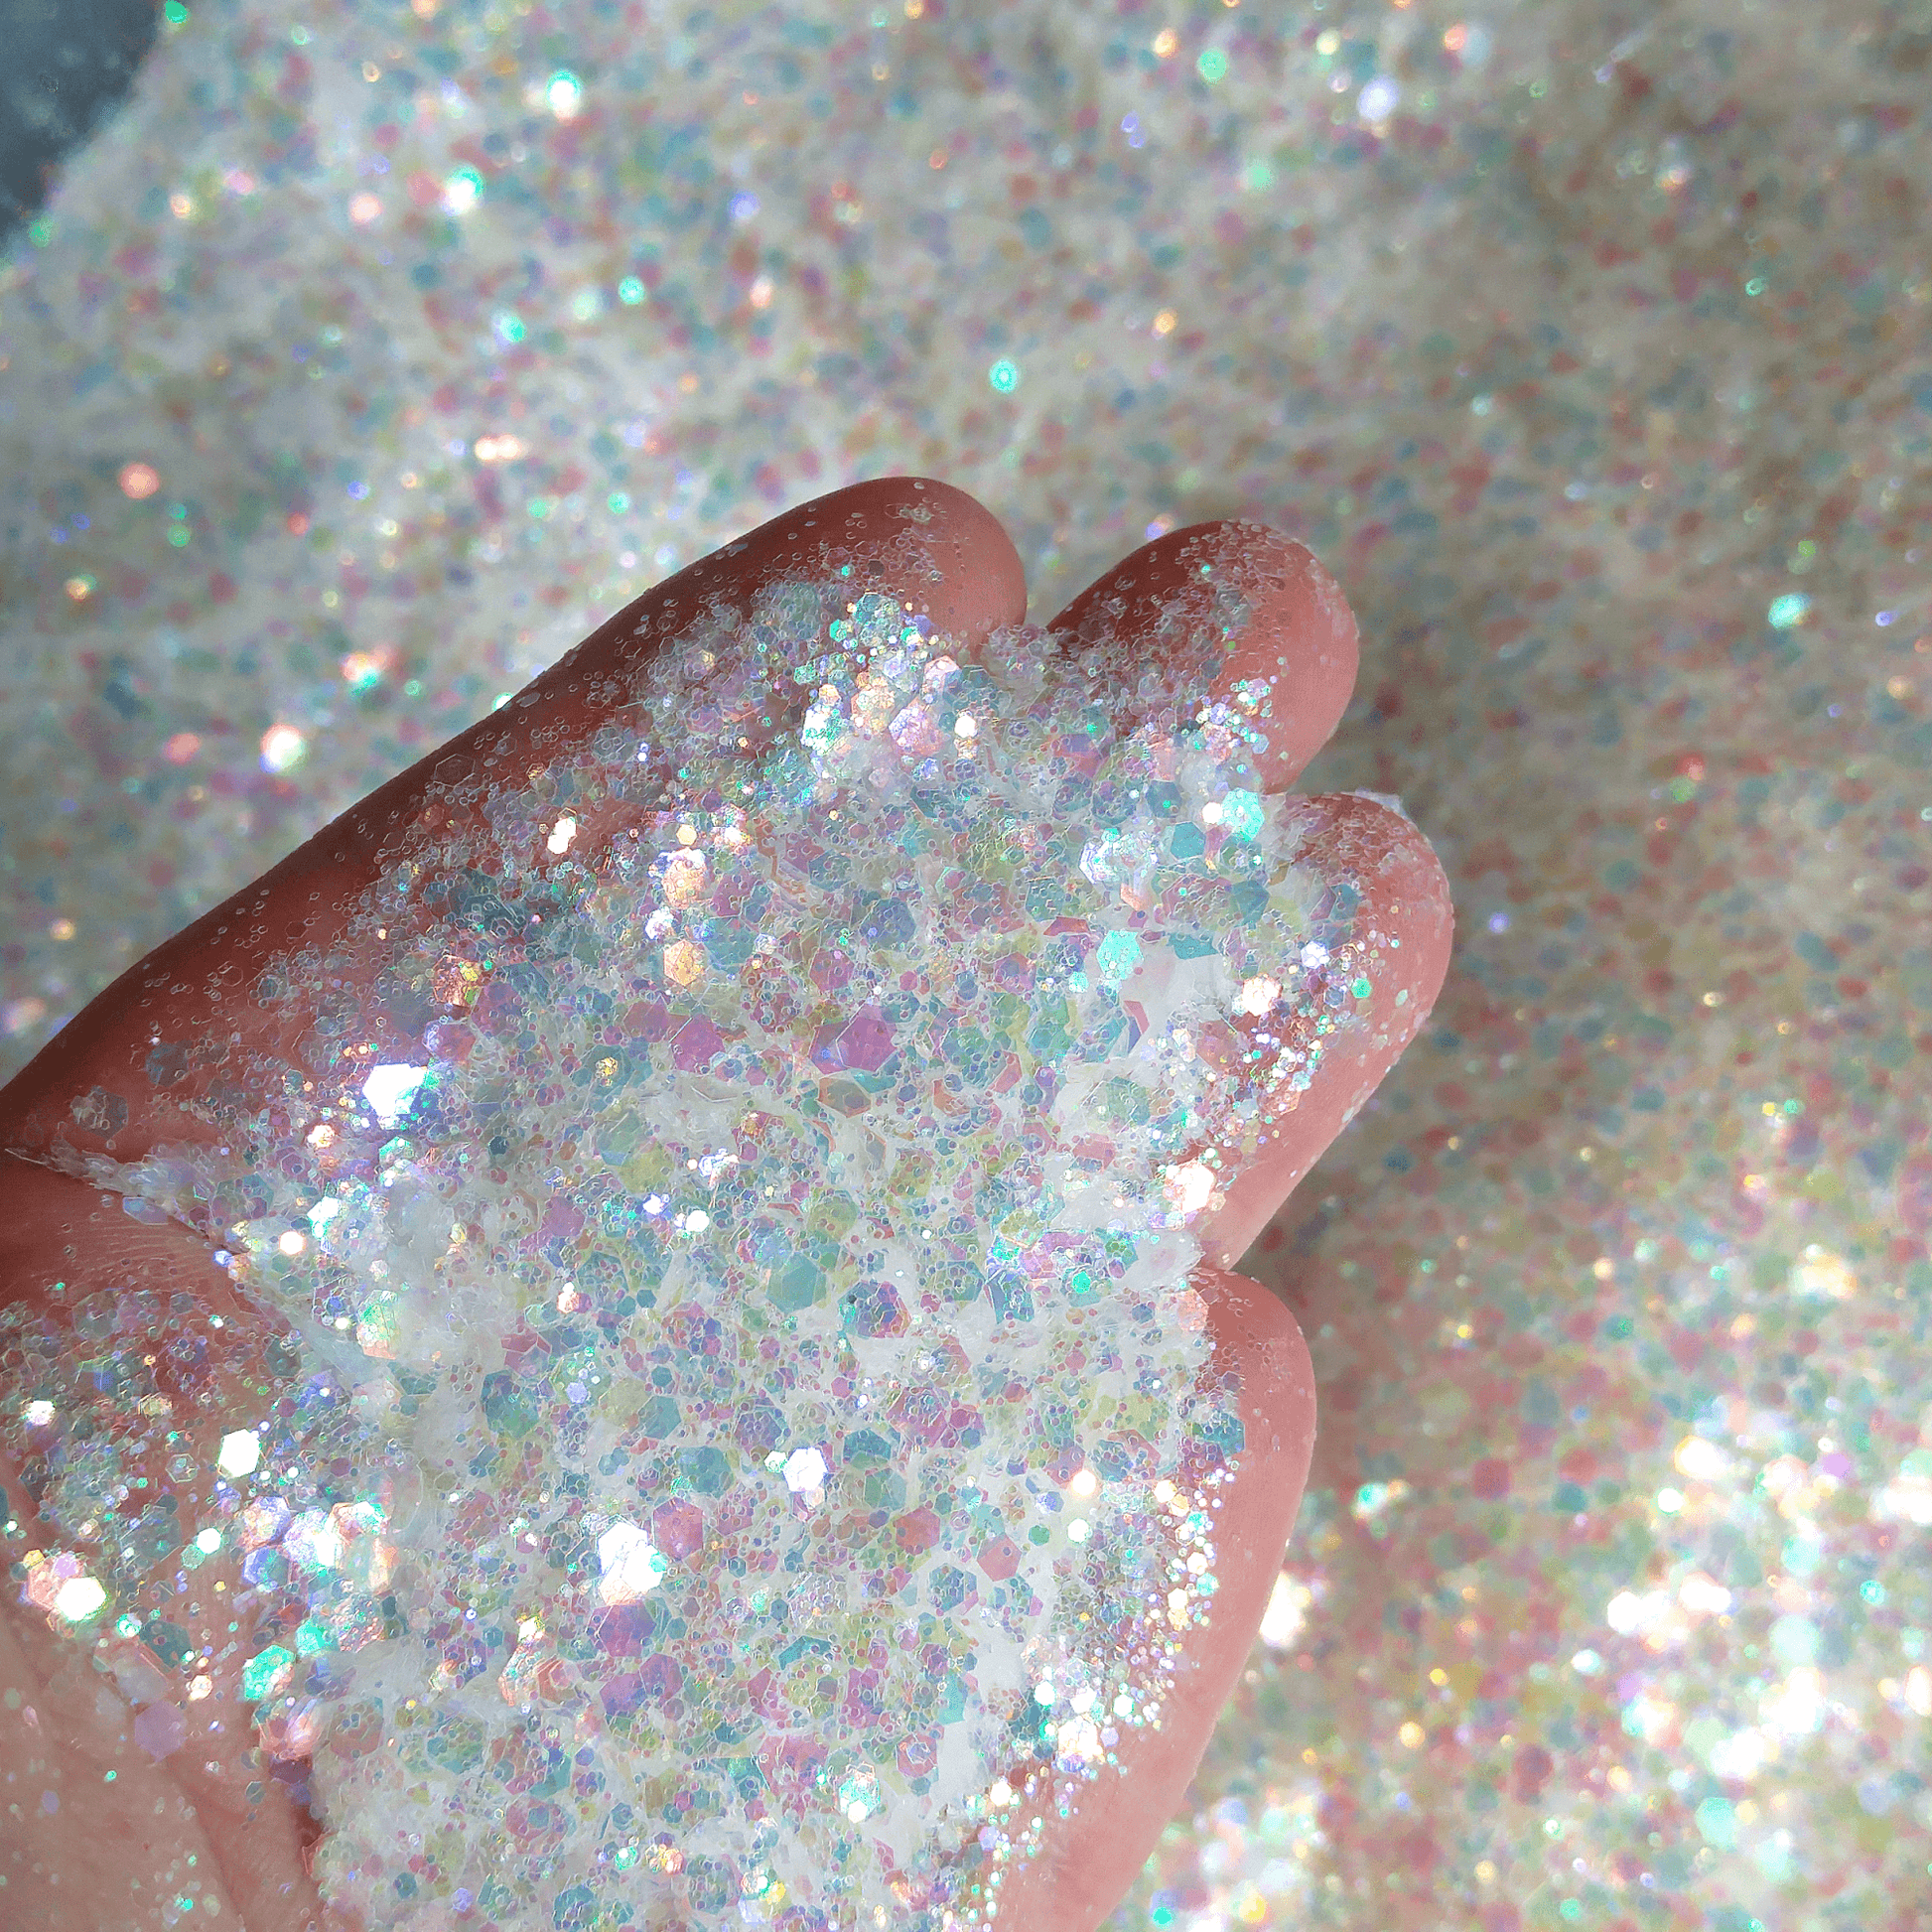 White Opal Iridescent Hexagon Glitter Mix - Sugar, Sugar  By Crazoulis Glitter